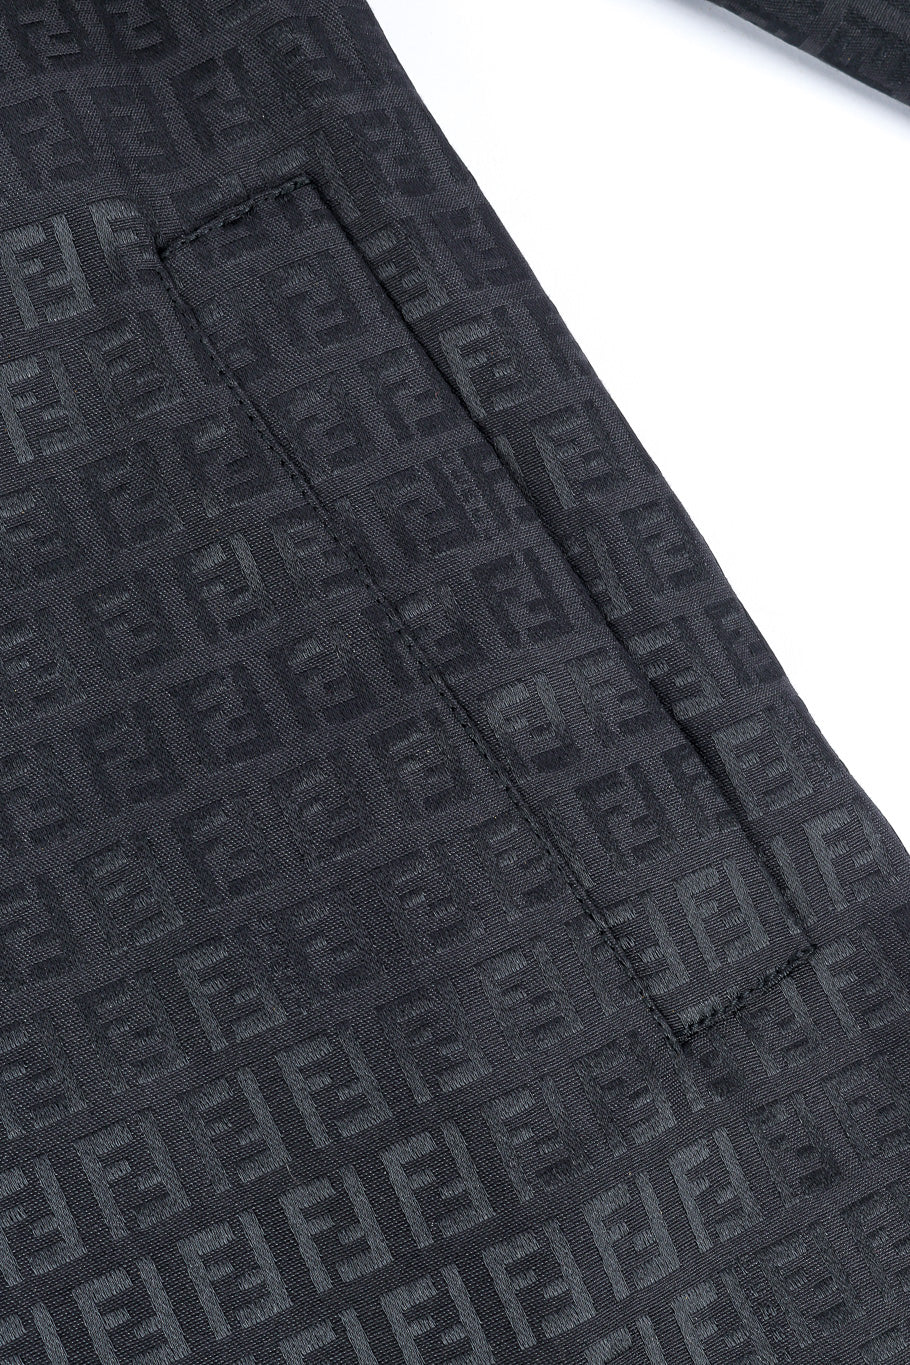 Fendi zucca monogram trench coat pocket detail @recessla